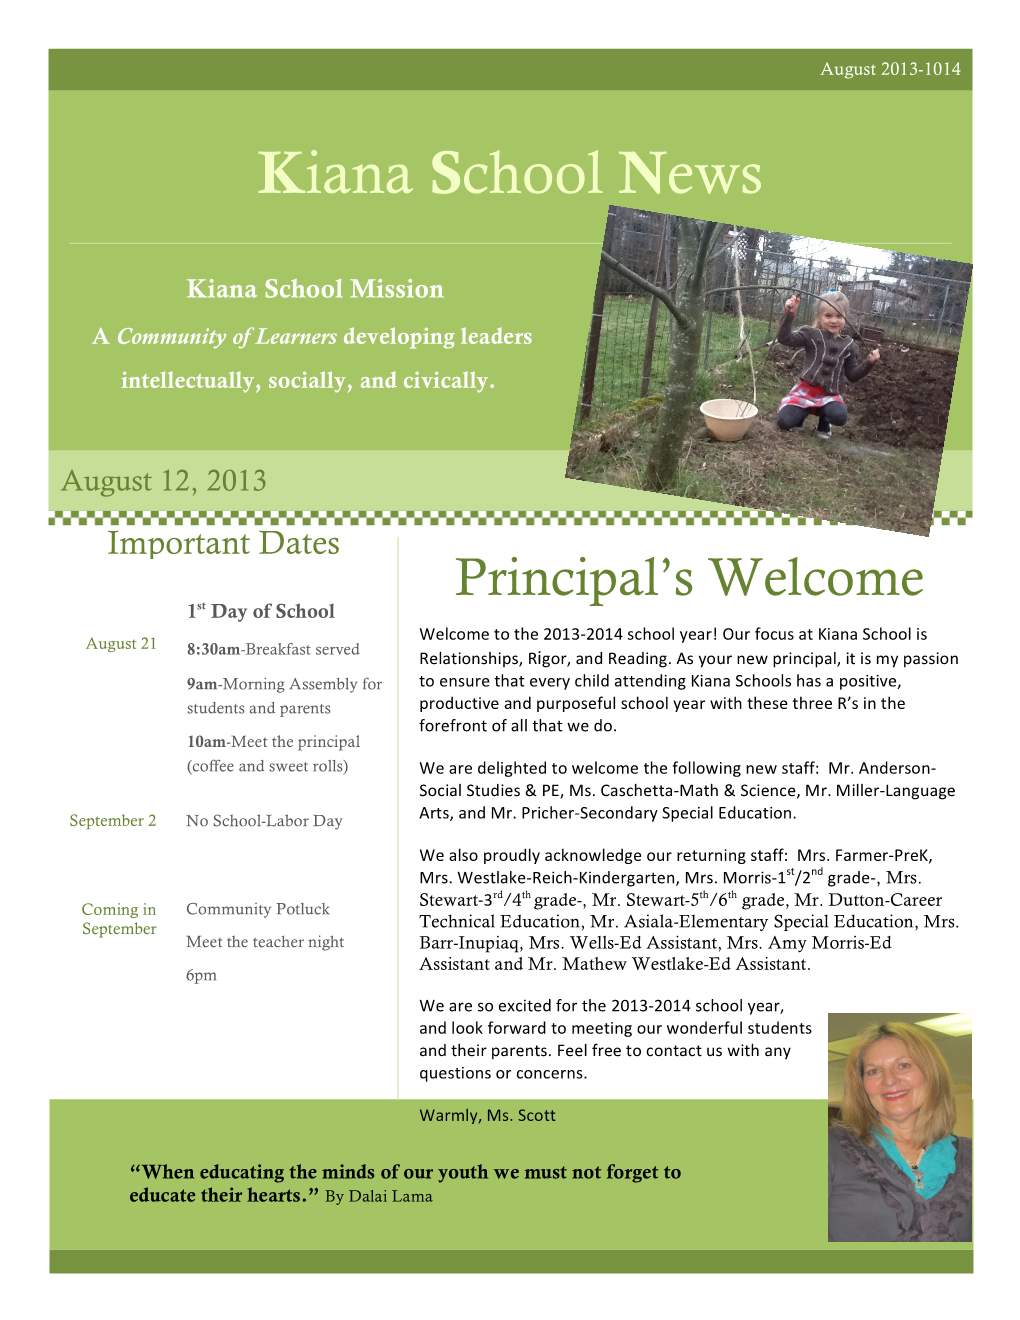 Kiana School News